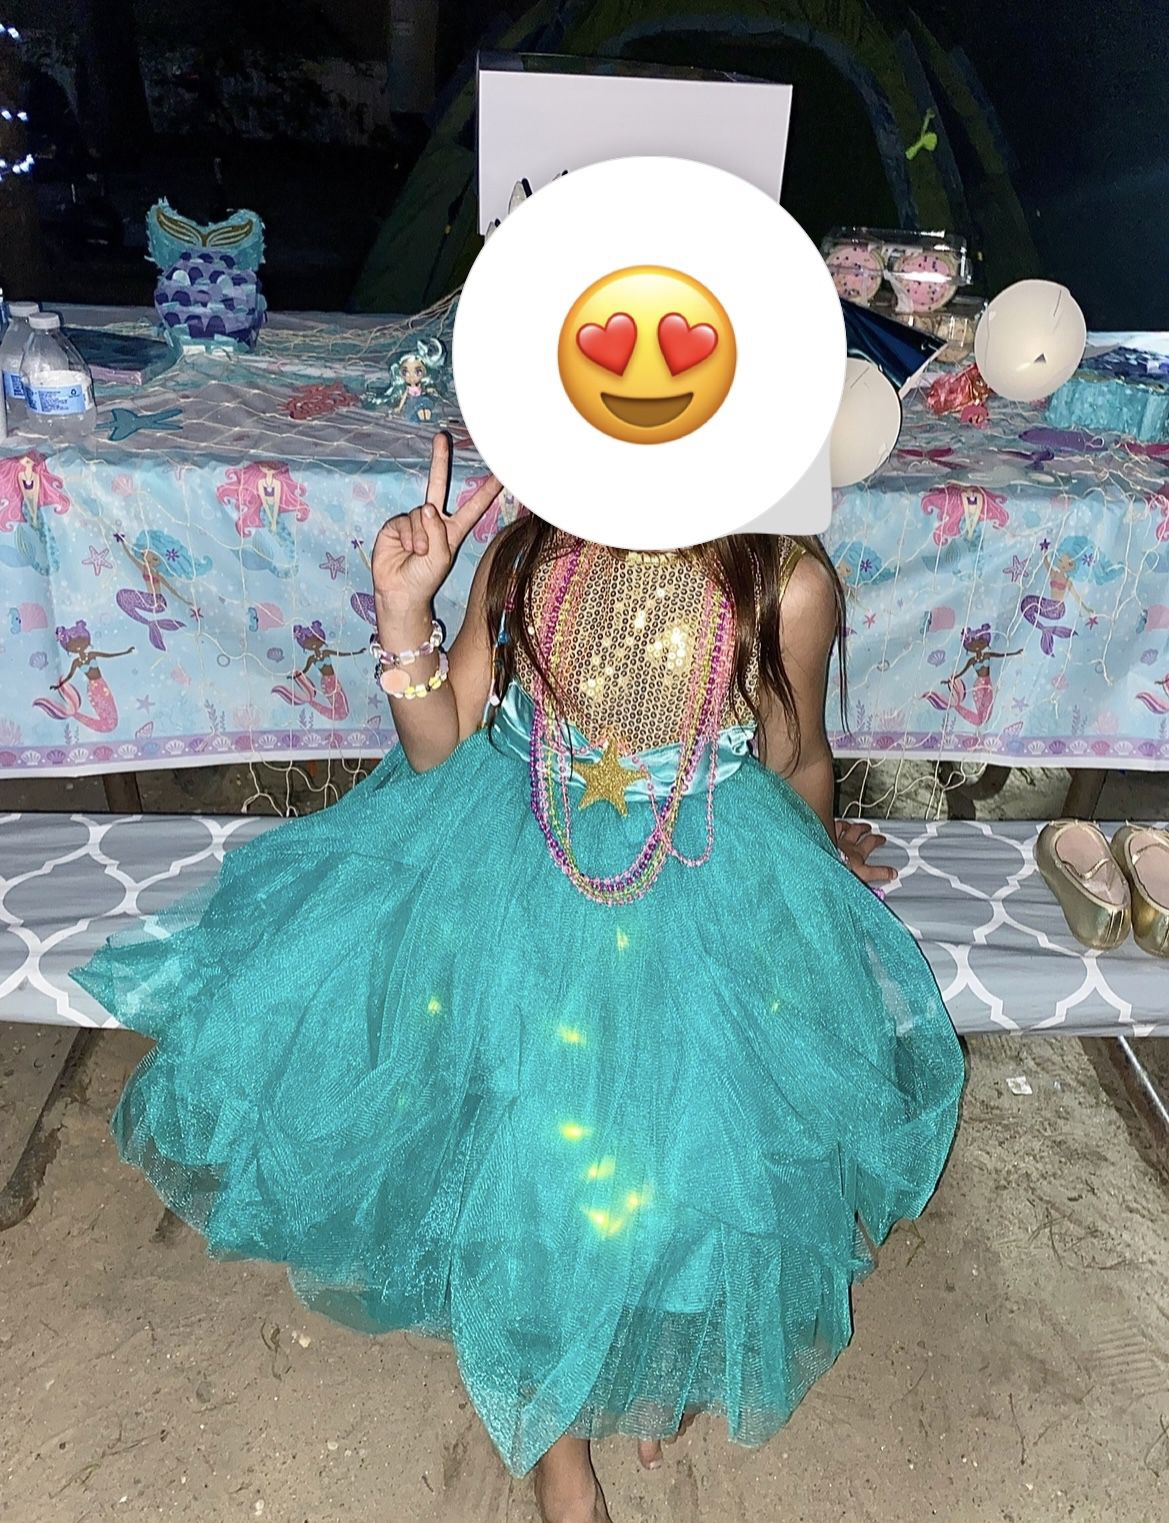 Mermaid Dress/costume 